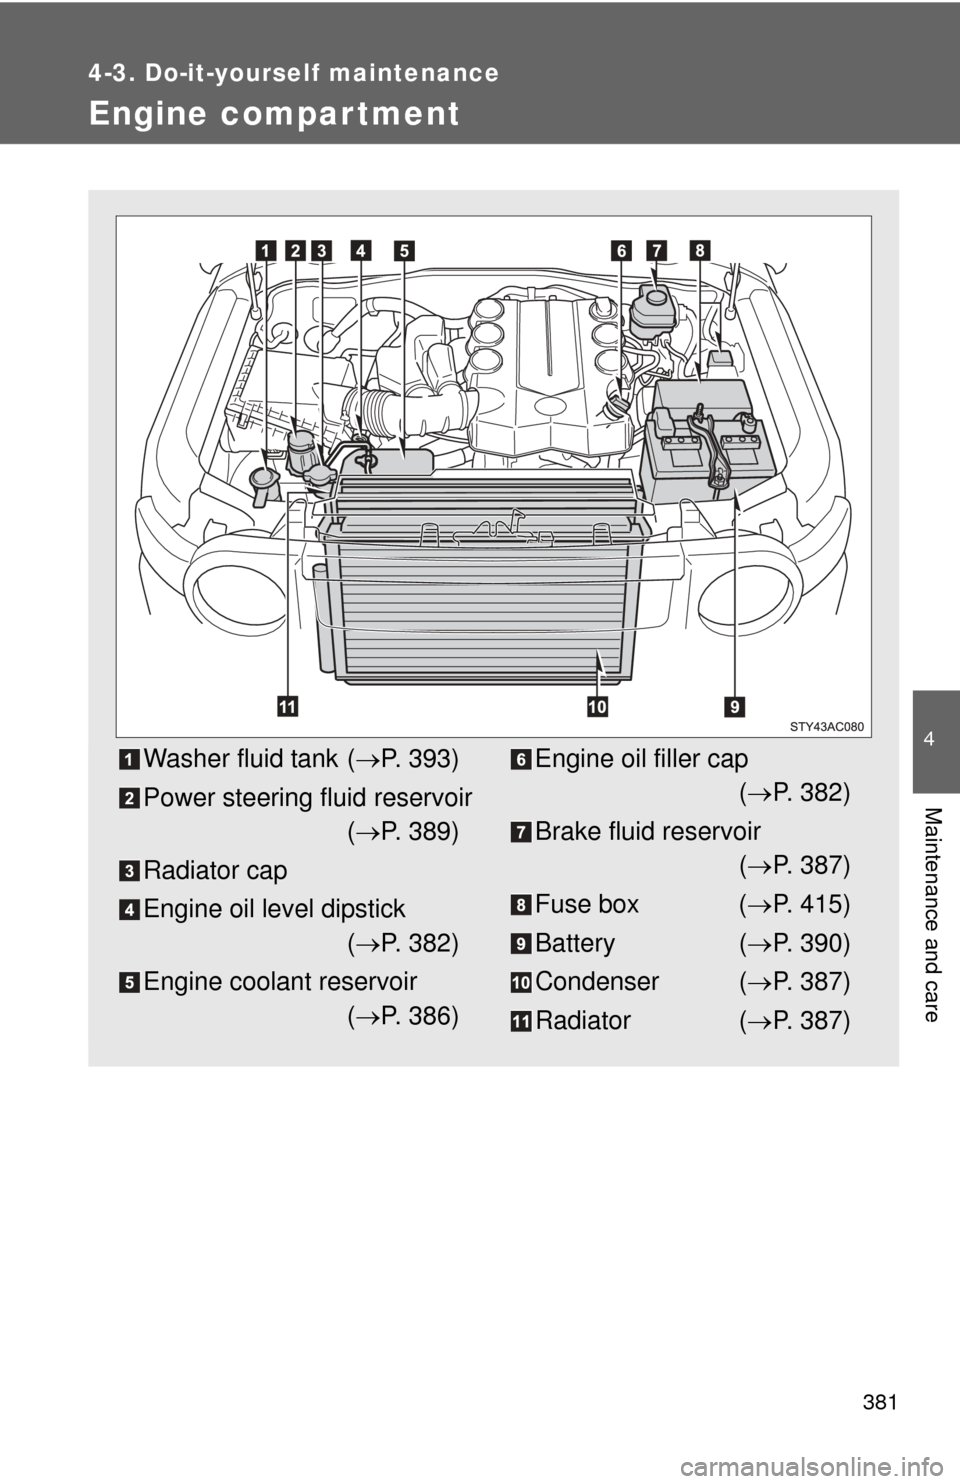 TOYOTA FJ CRUISER 2012 1.G Owners Manual 381
4-3. Do-it-yourself maintenance
4
Maintenance and care
Engine compar tment
Washer fluid tank (P. 393)
Power steering fluid reservoir ( P. 389)
Radiator cap
Engine oil level dipstick ( P. 